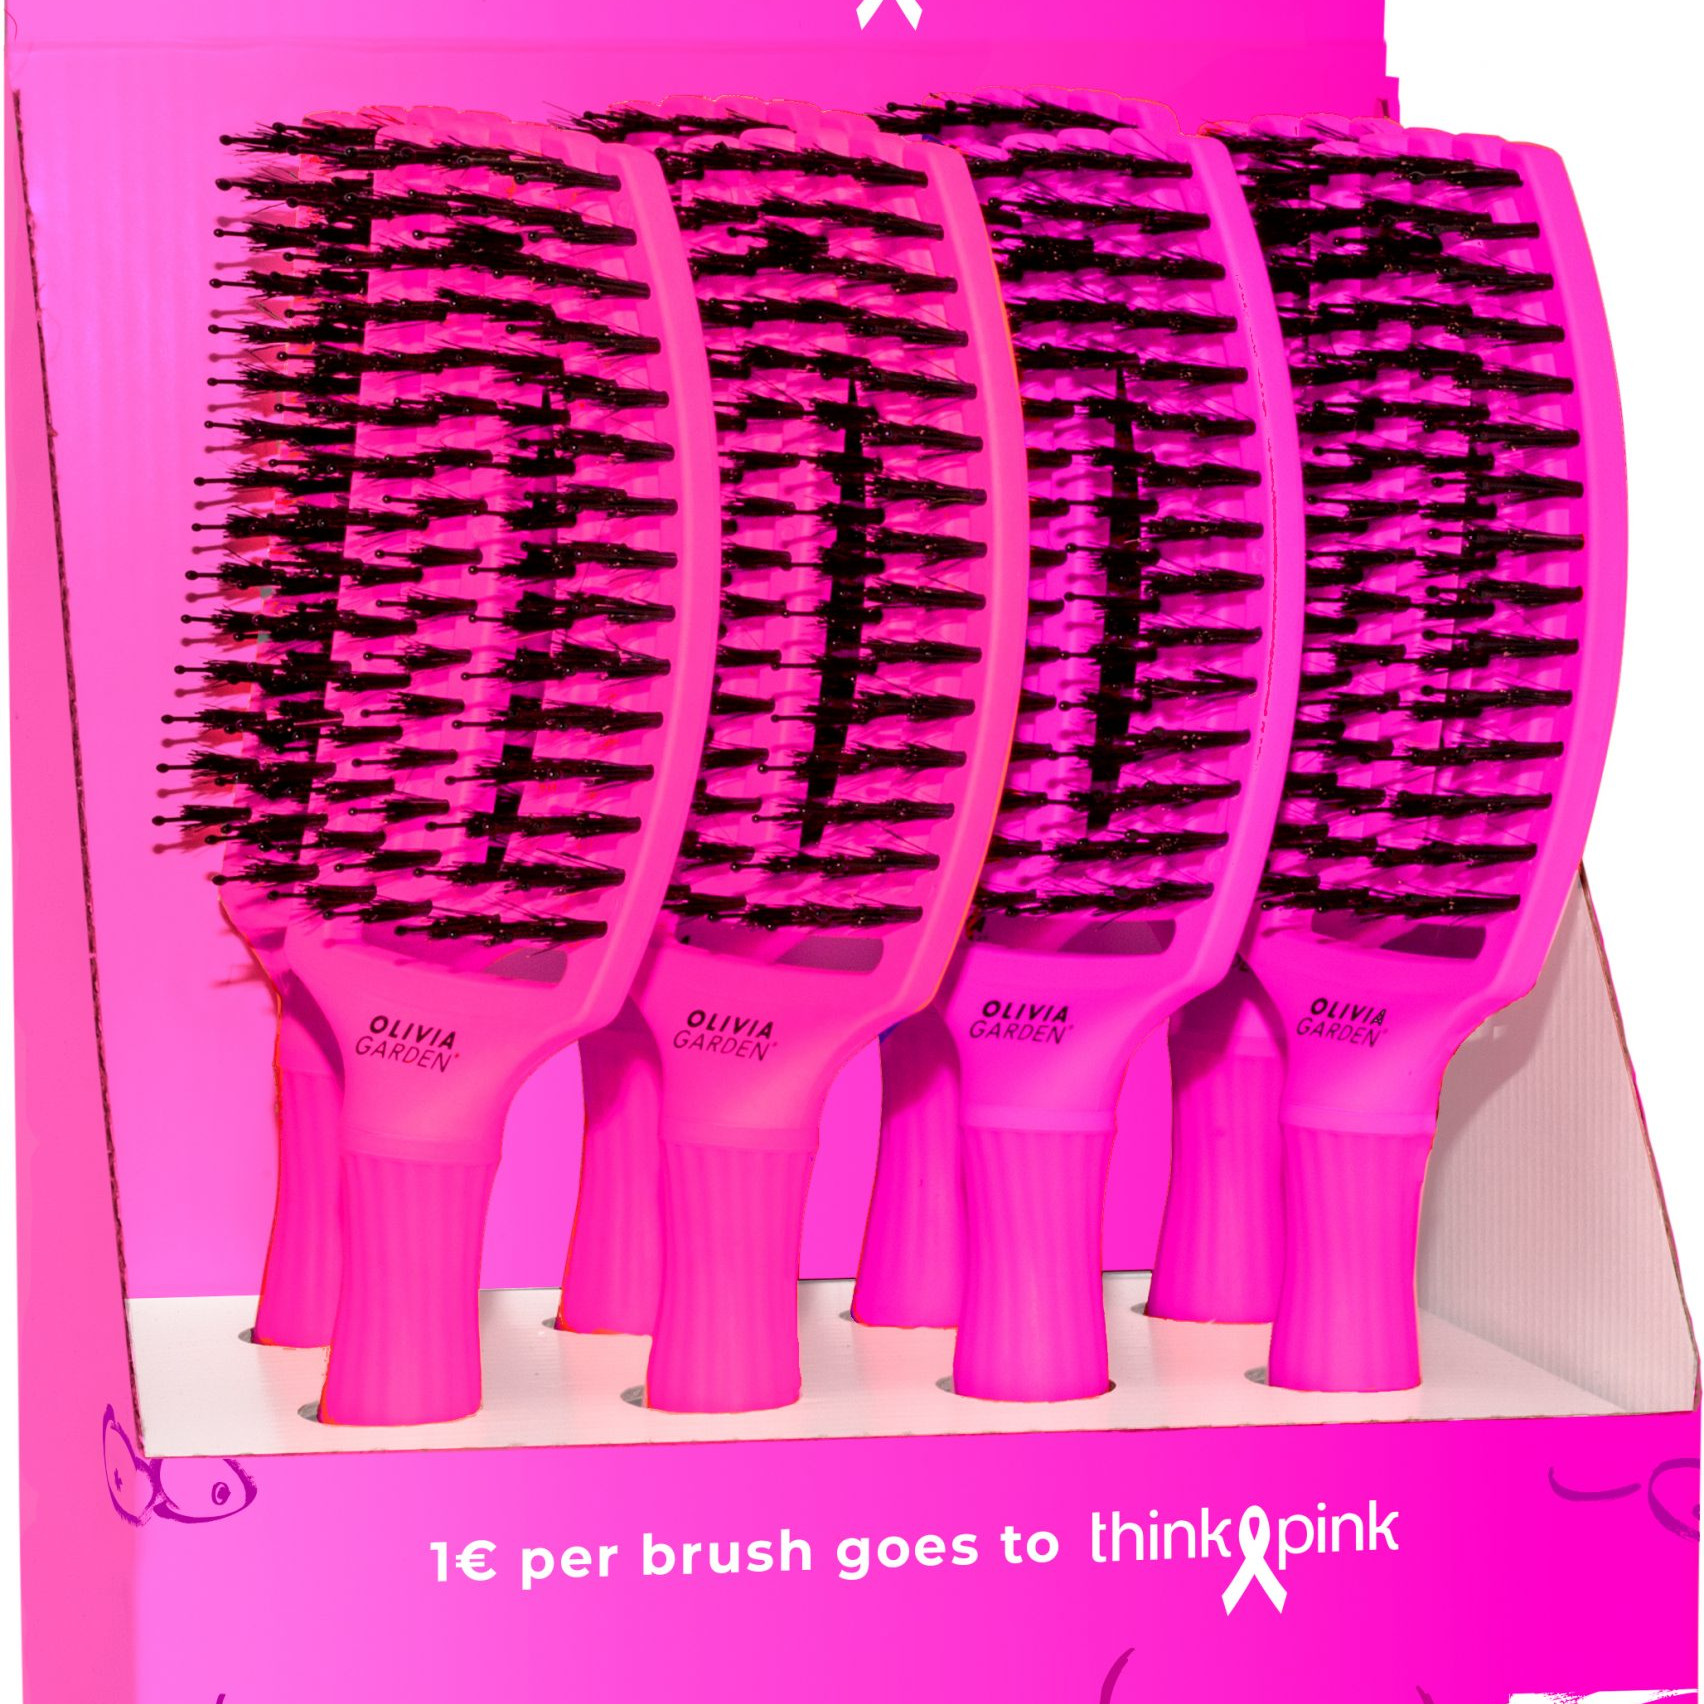 Olivia Garden Fingerbrush Think Pink 8er Display